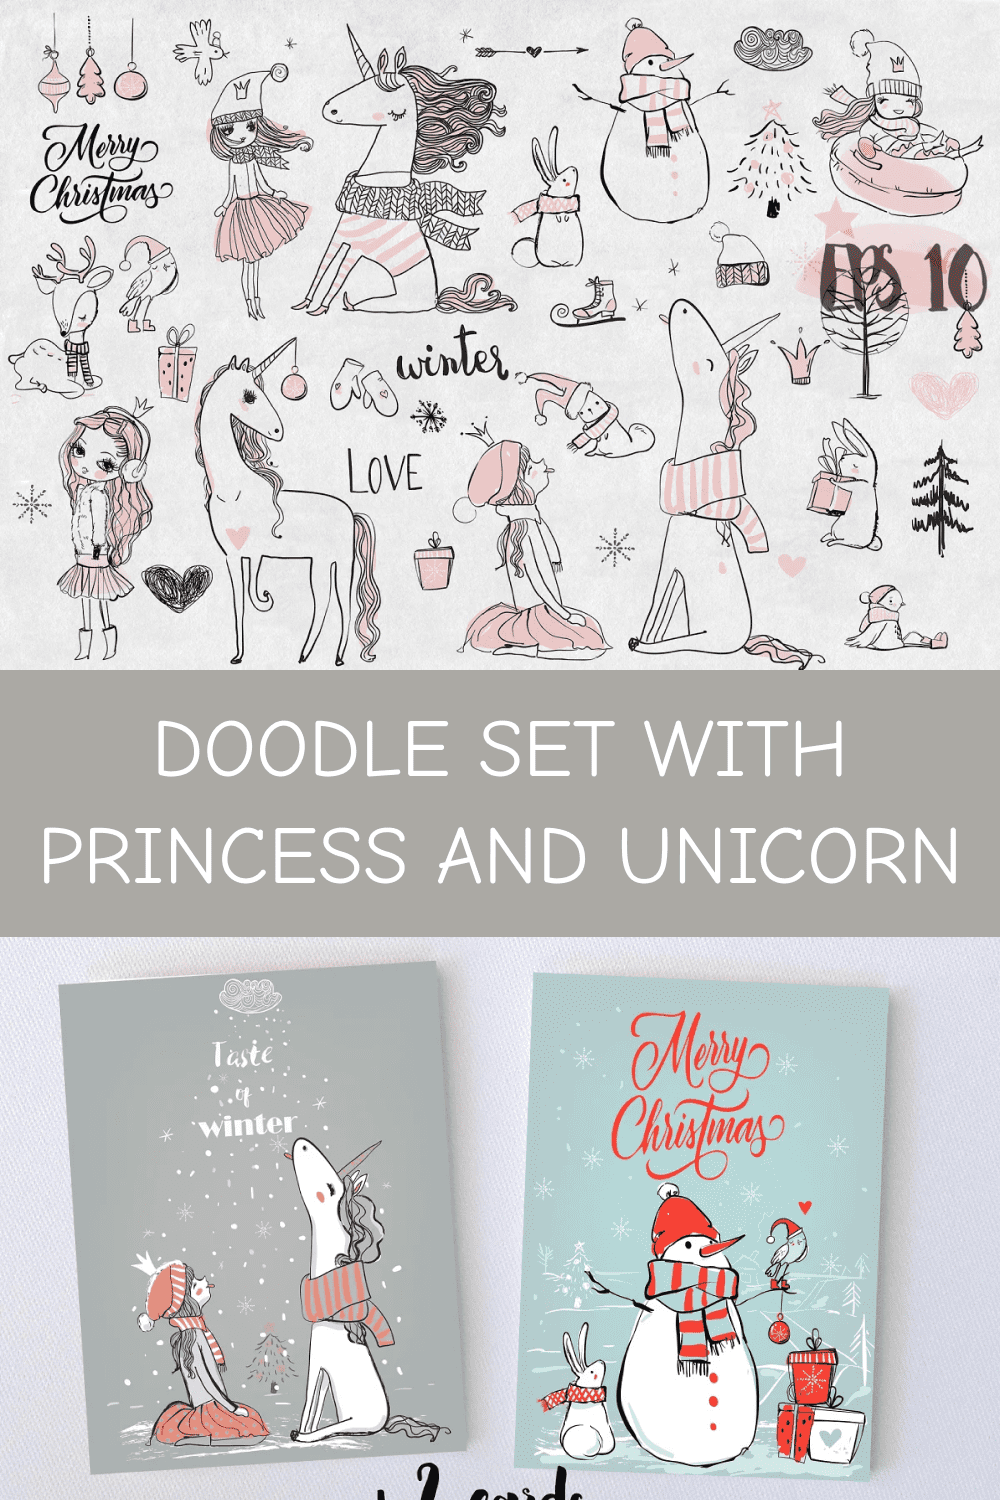 Doodle Set with Princess and Unicorn.